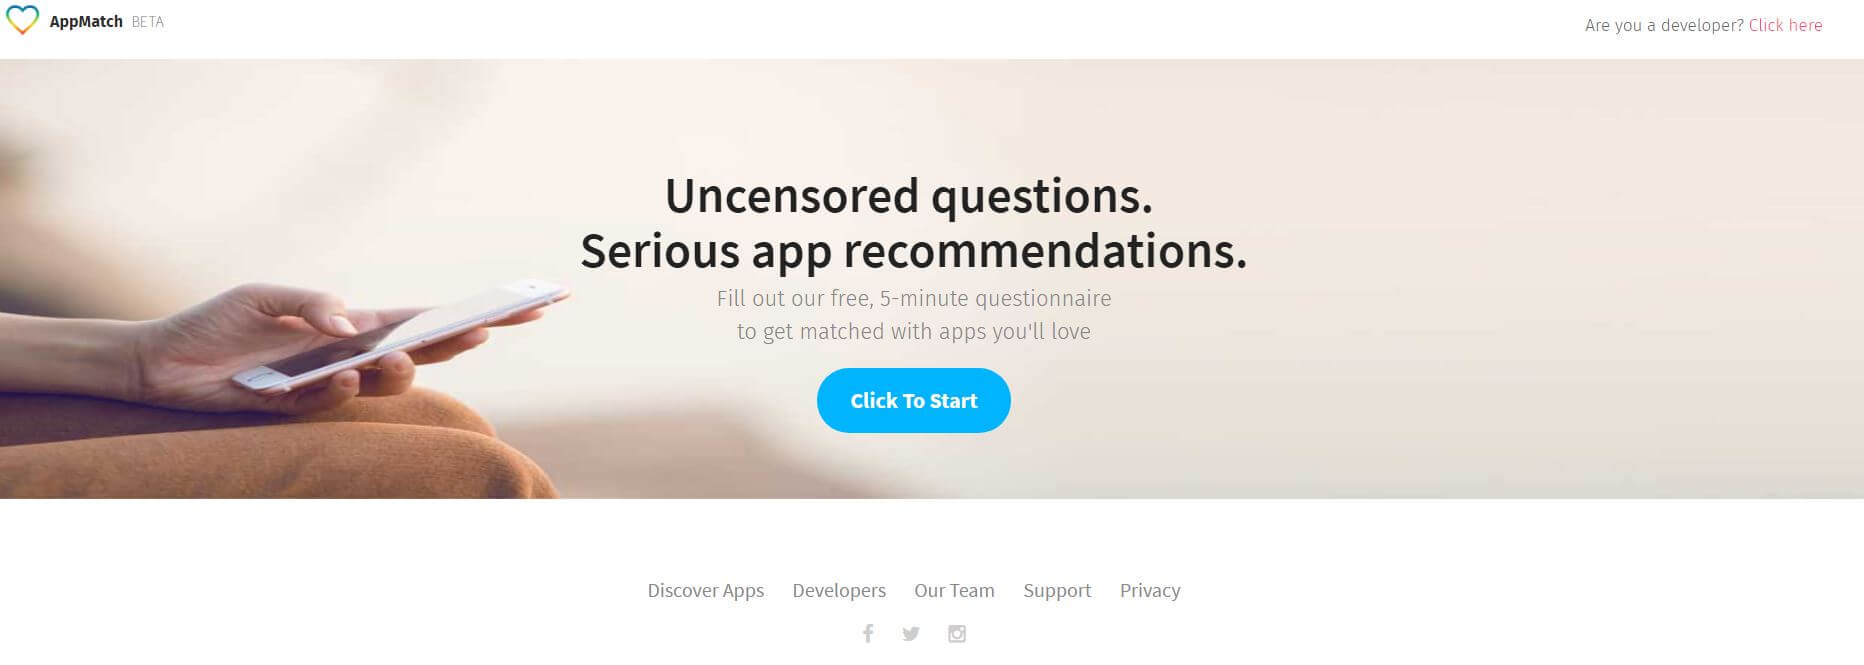 AppMatch Review - Desktop Homepage